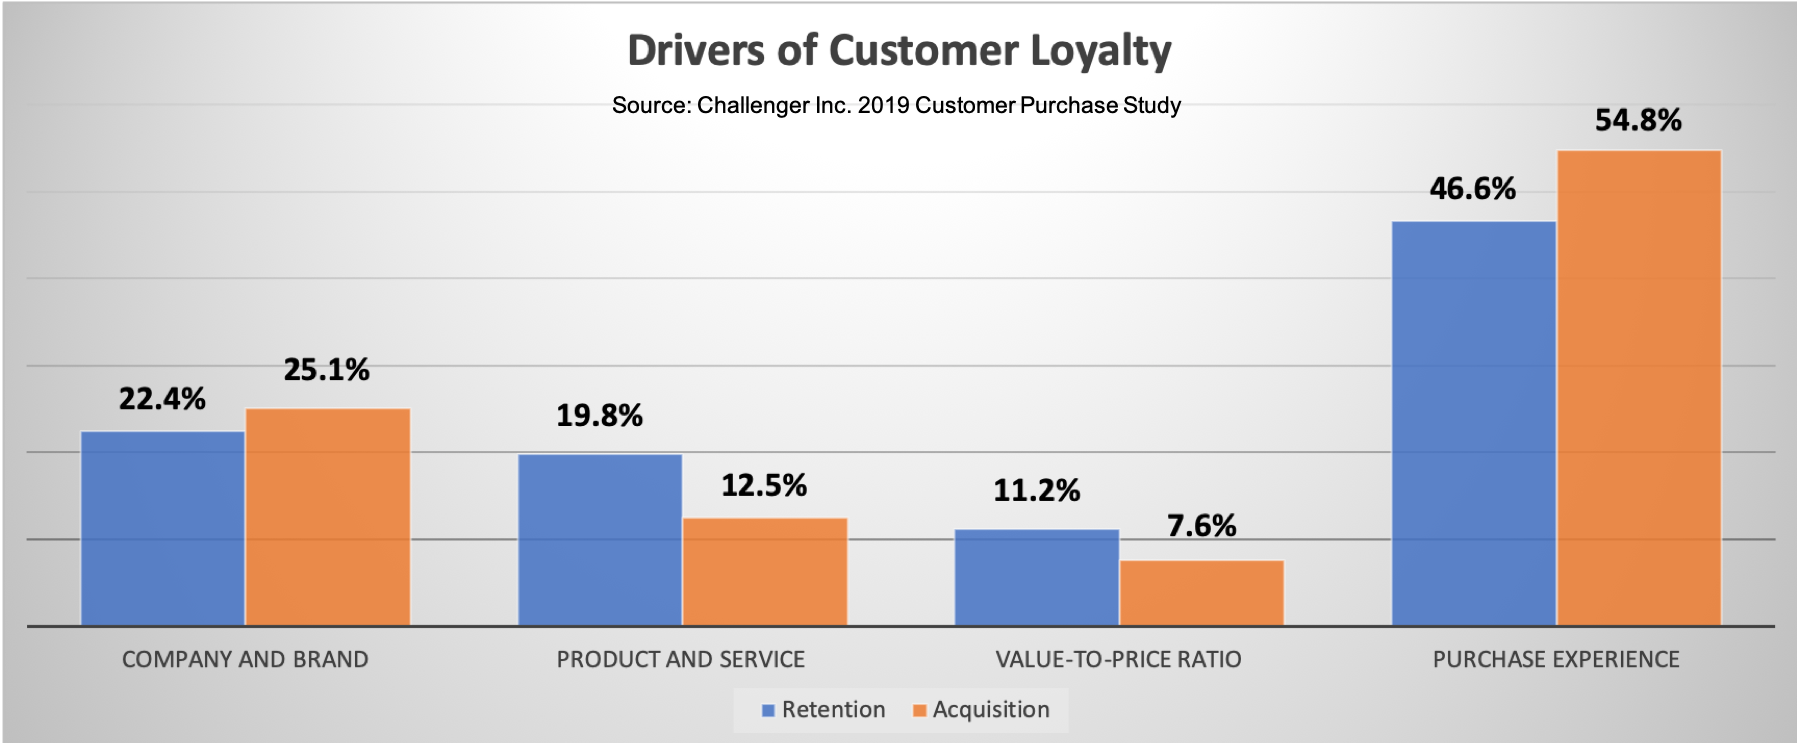 Drivers of Customer Loyalty 2